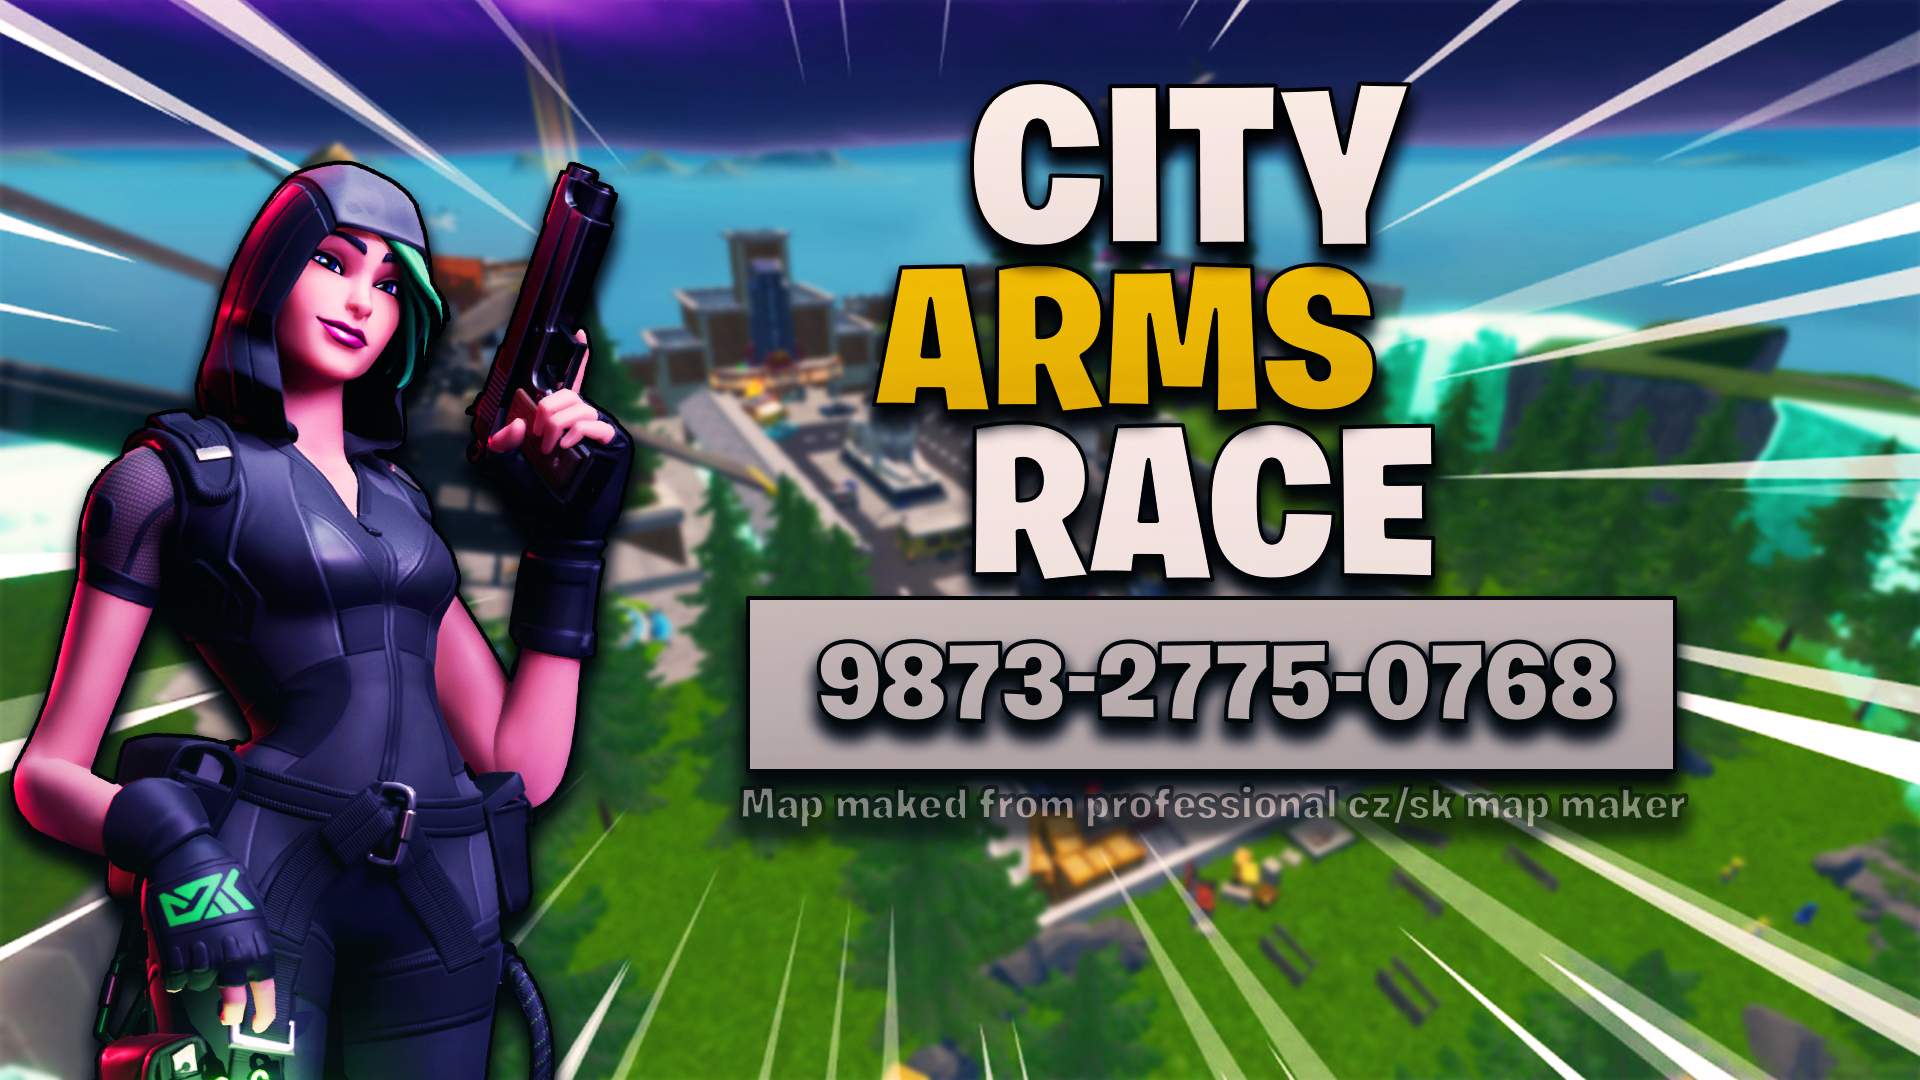 CITY ARMS RACE